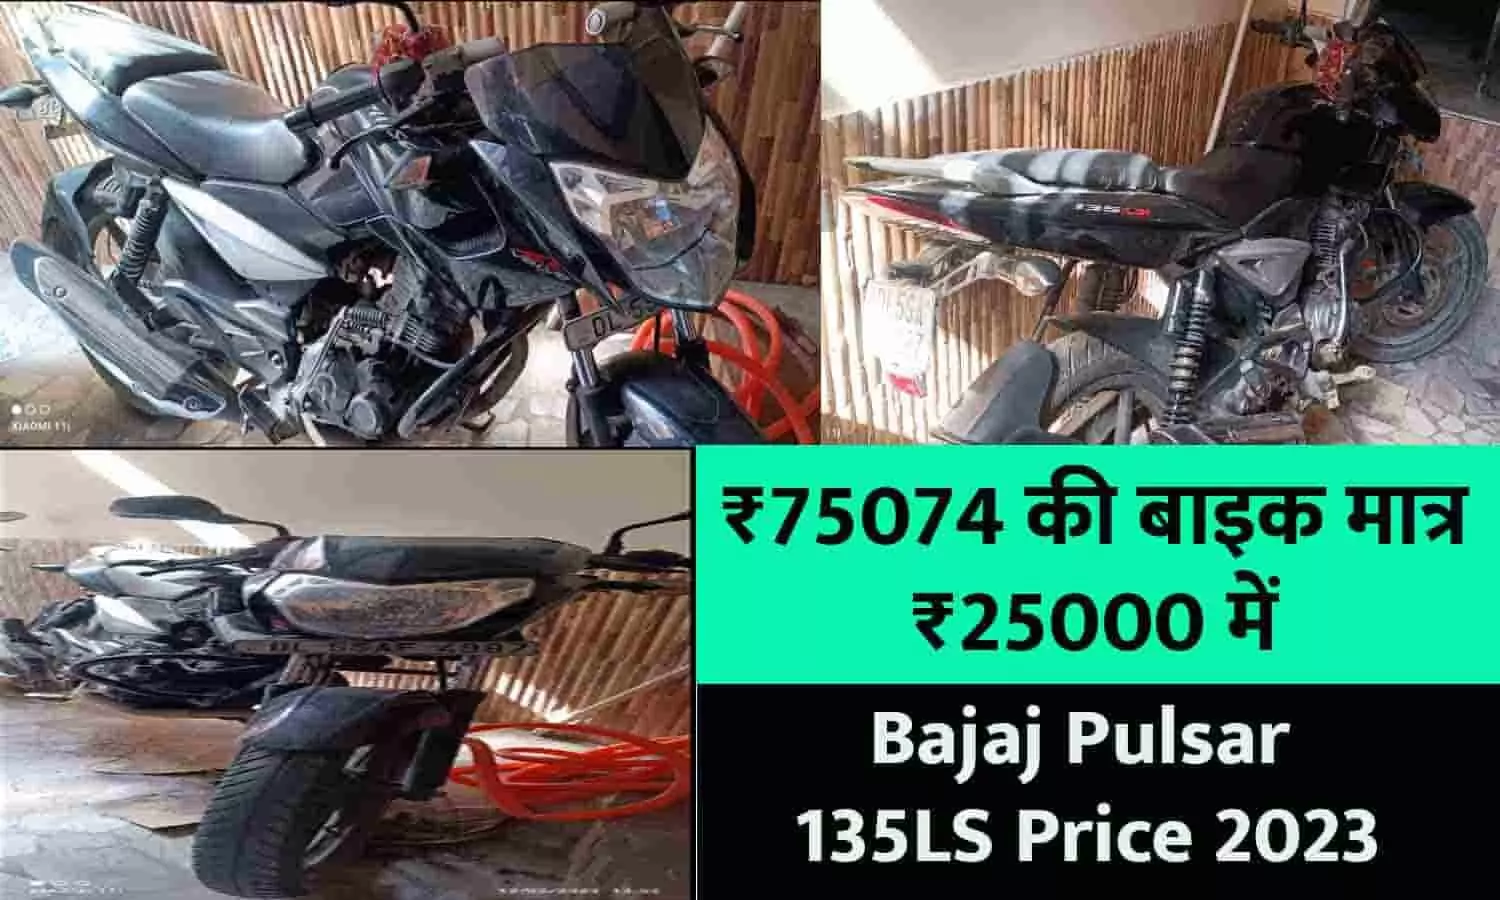 Bajaj Pulsar 135LS Price 2023